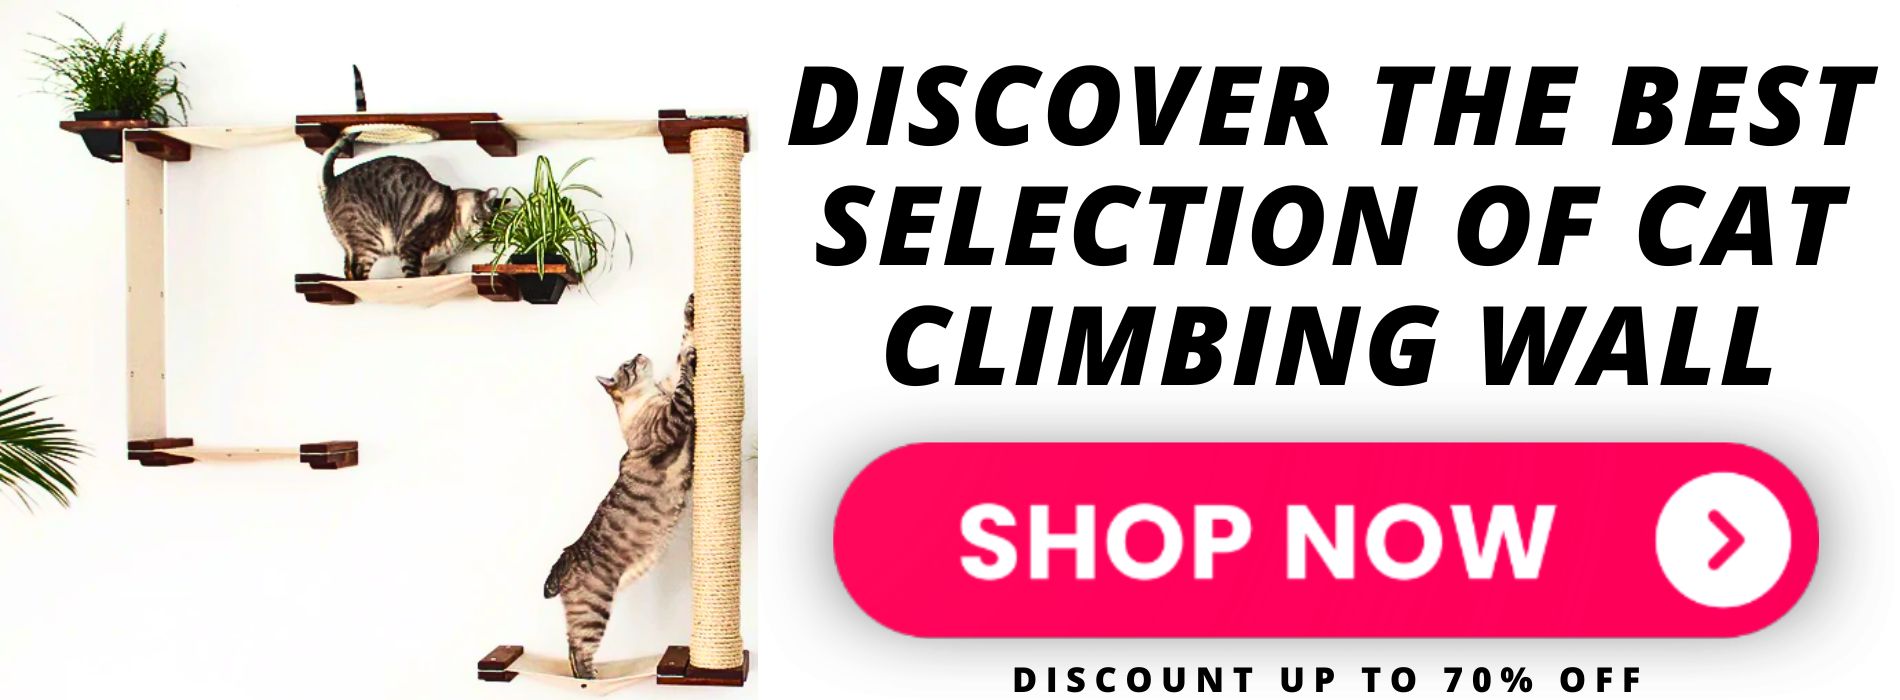 cat-climbing-wall